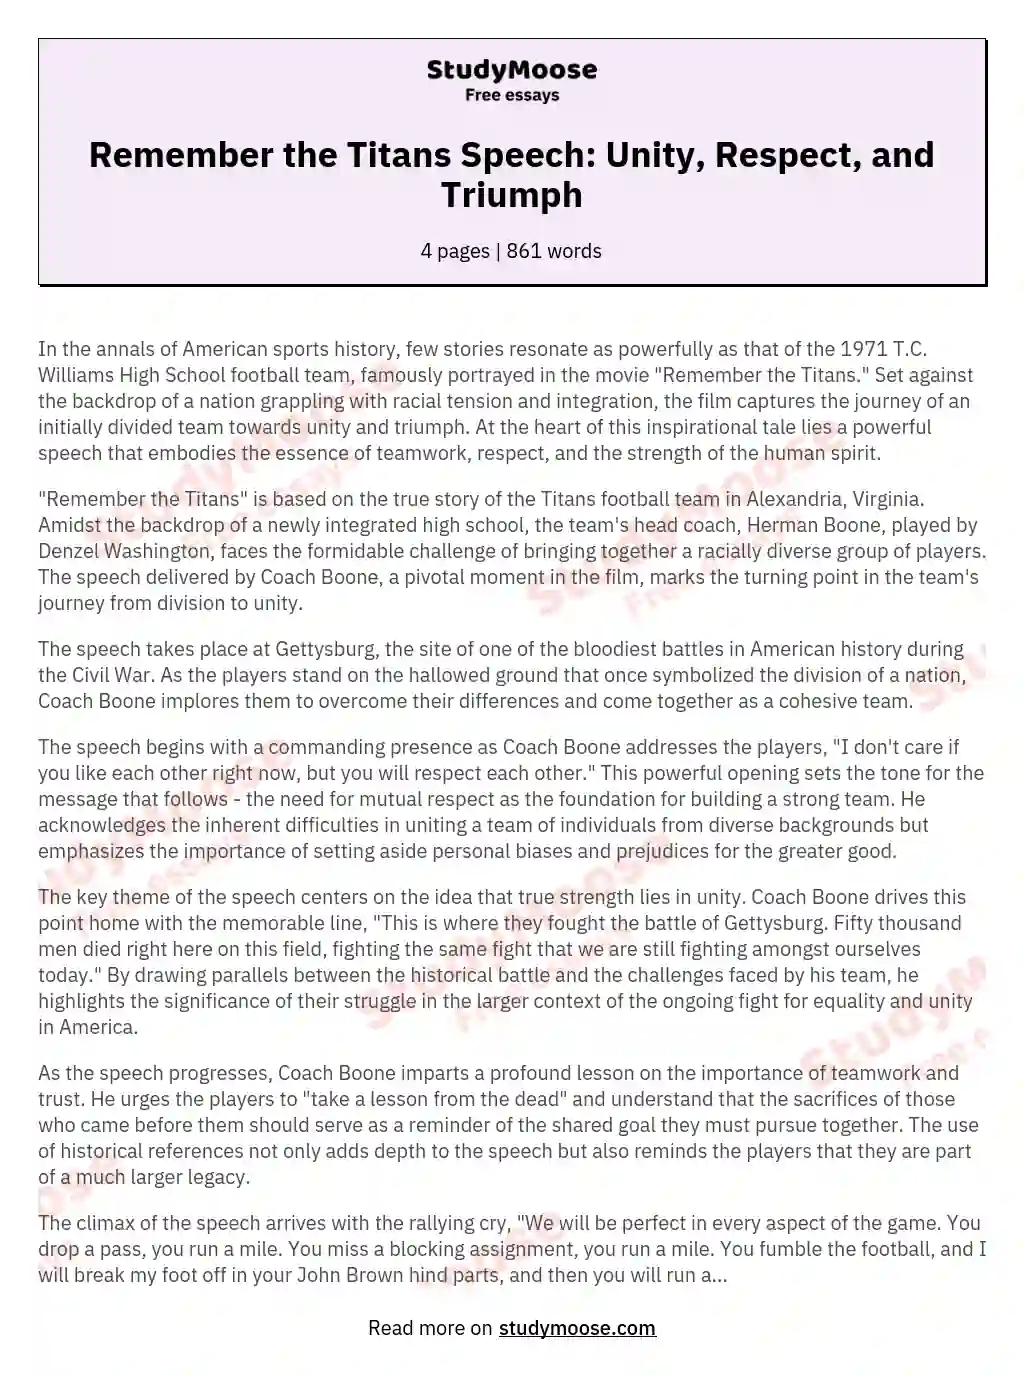 Remember the Titans Speech: Unity, Respect, and Triumph essay